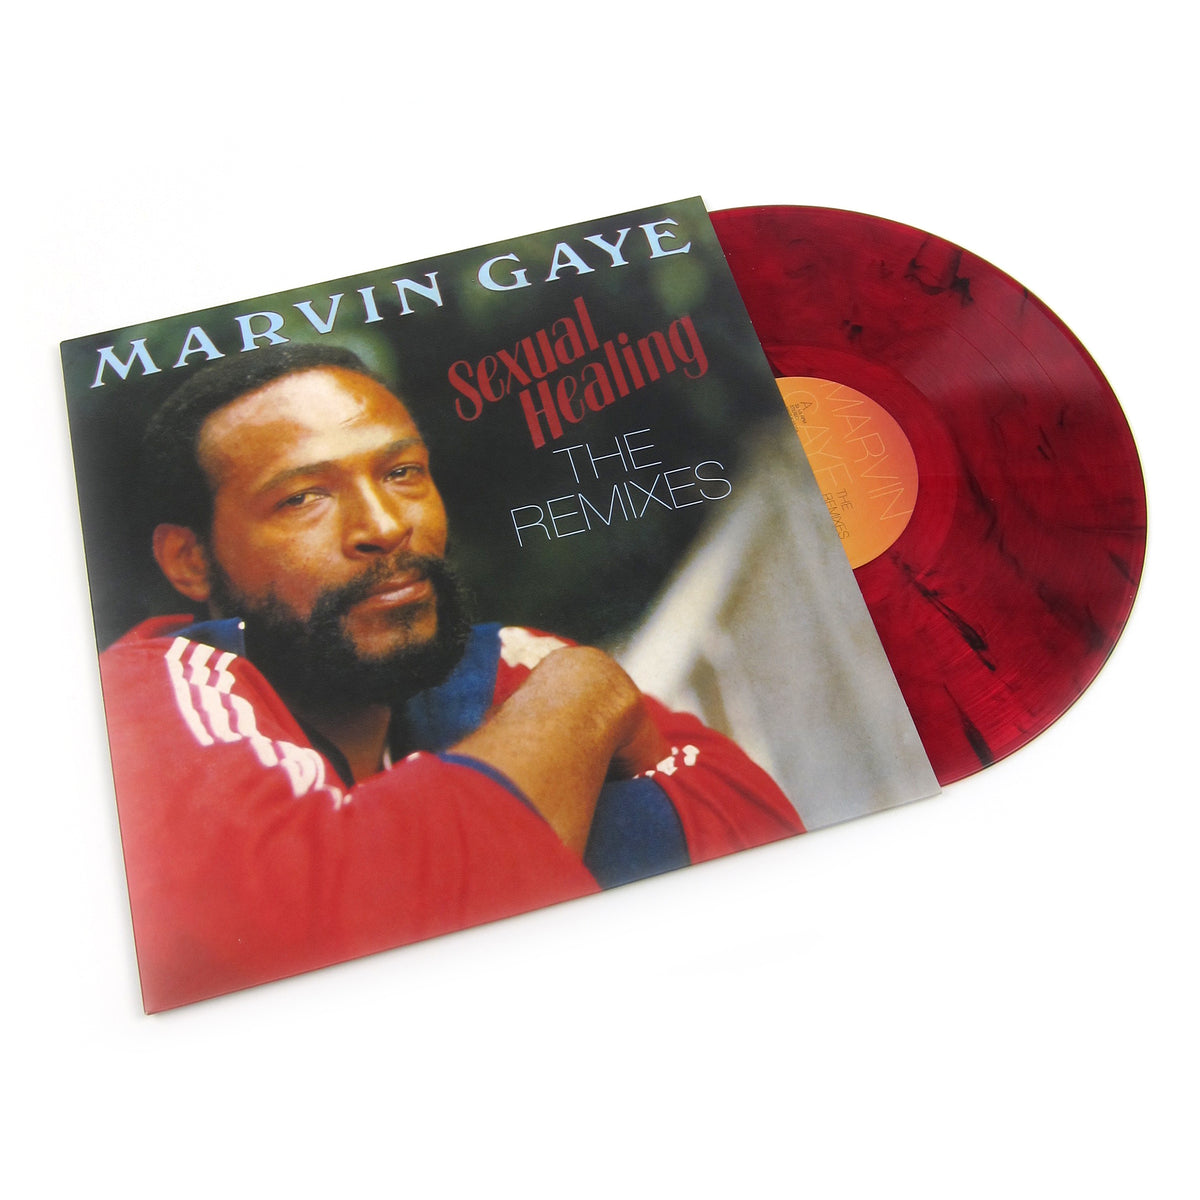 Marvin Gaye Sexual Healing The Remixes Colored Vinyl Vinyl Lp Re